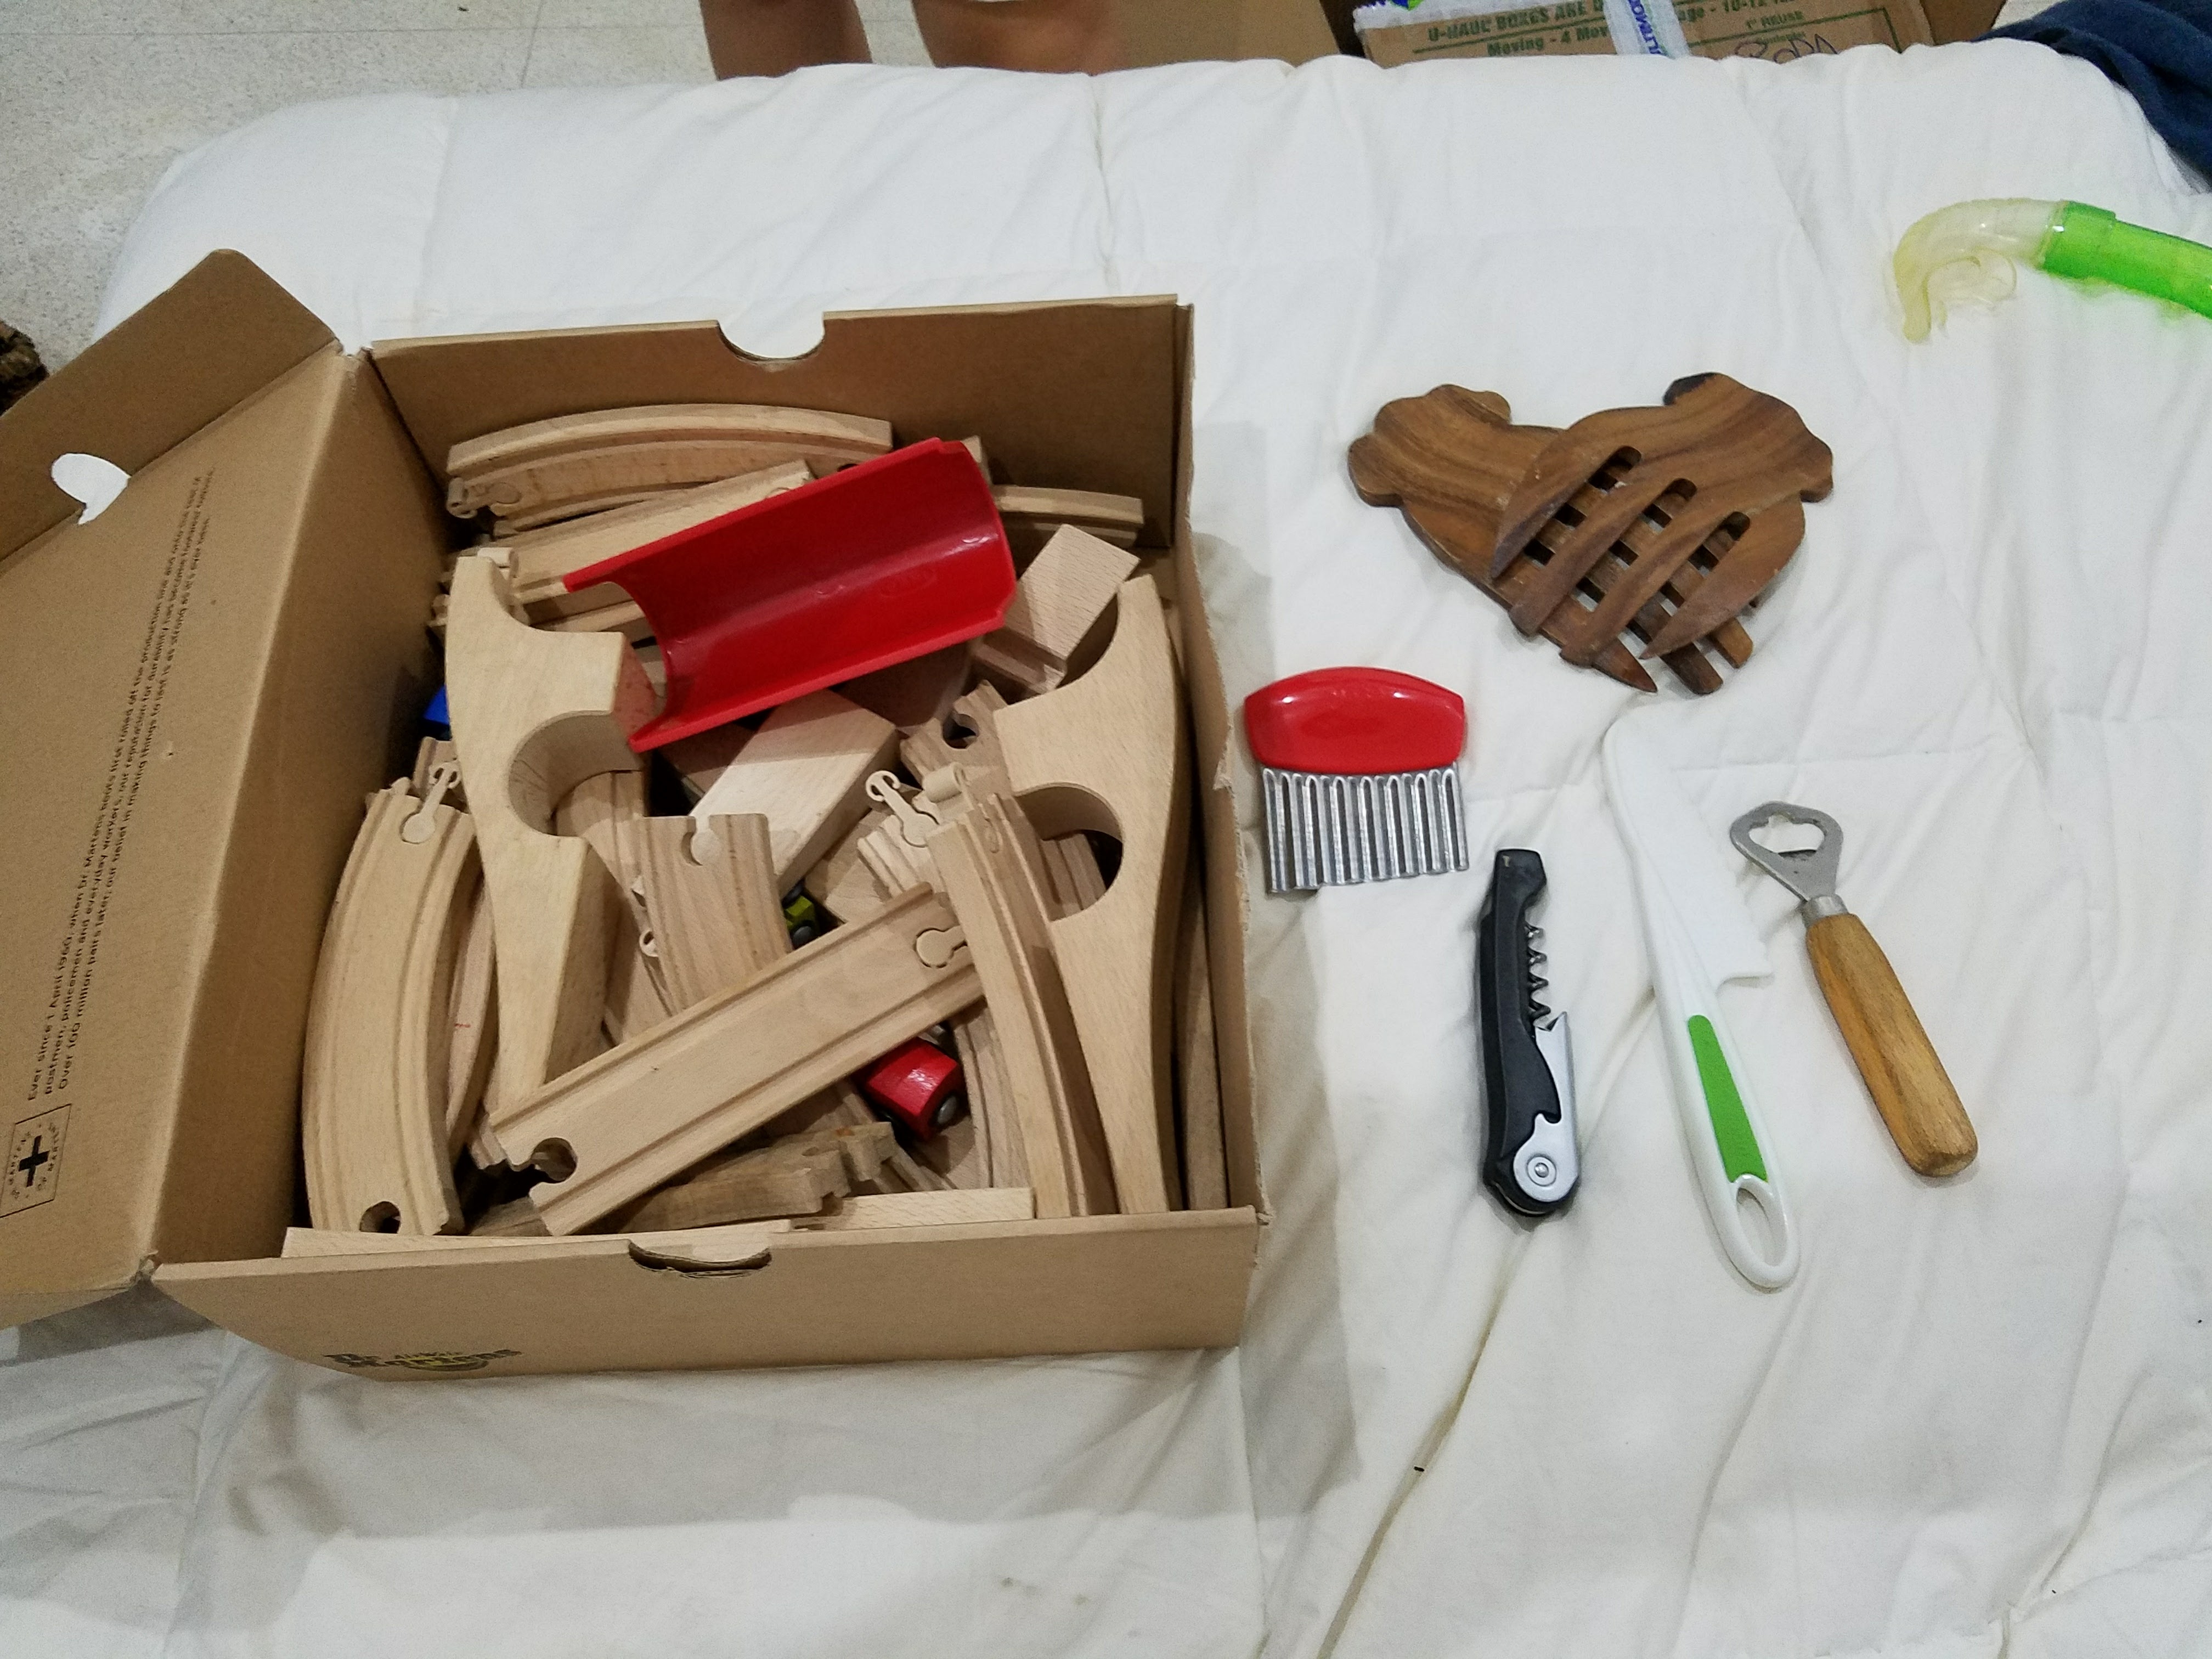 Sharp tools in child's toybox